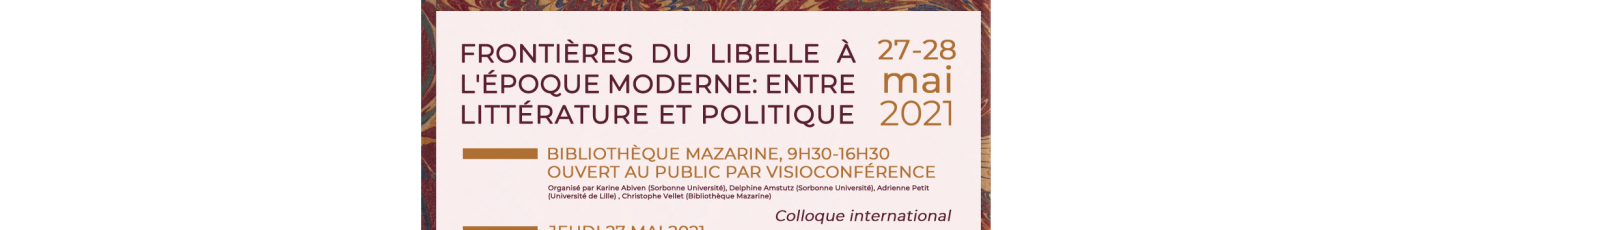 Colloque Mazarinades 2021 - flyer